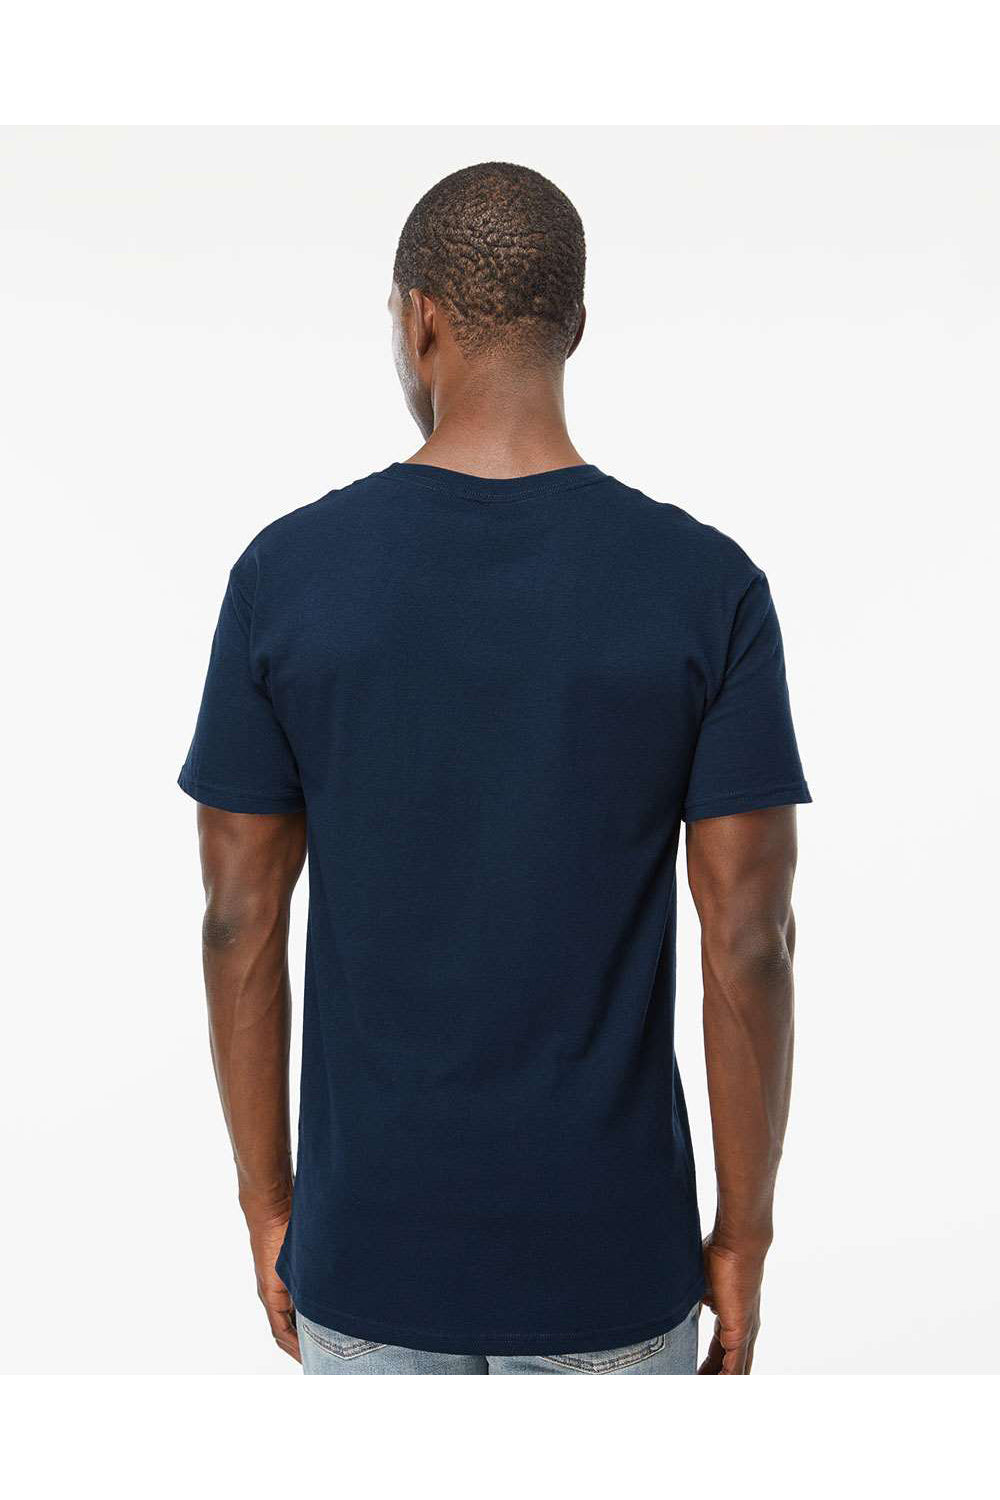 M&O 4800 Mens Gold Soft Touch Short Sleeve Crewneck T-Shirt Deep Navy Blue Model Back